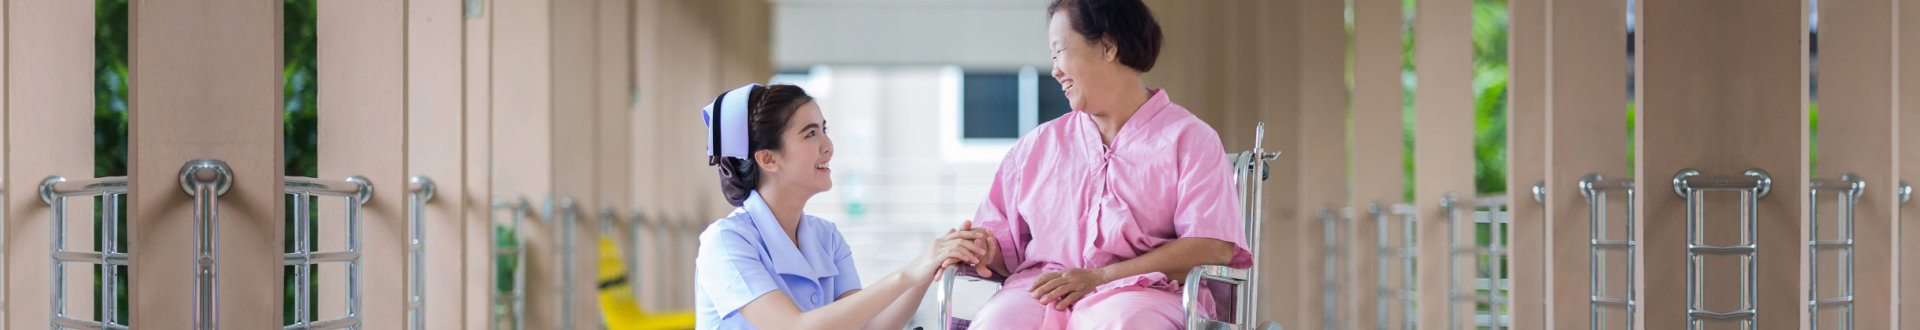 nurse with her senior patient on a wheelchair